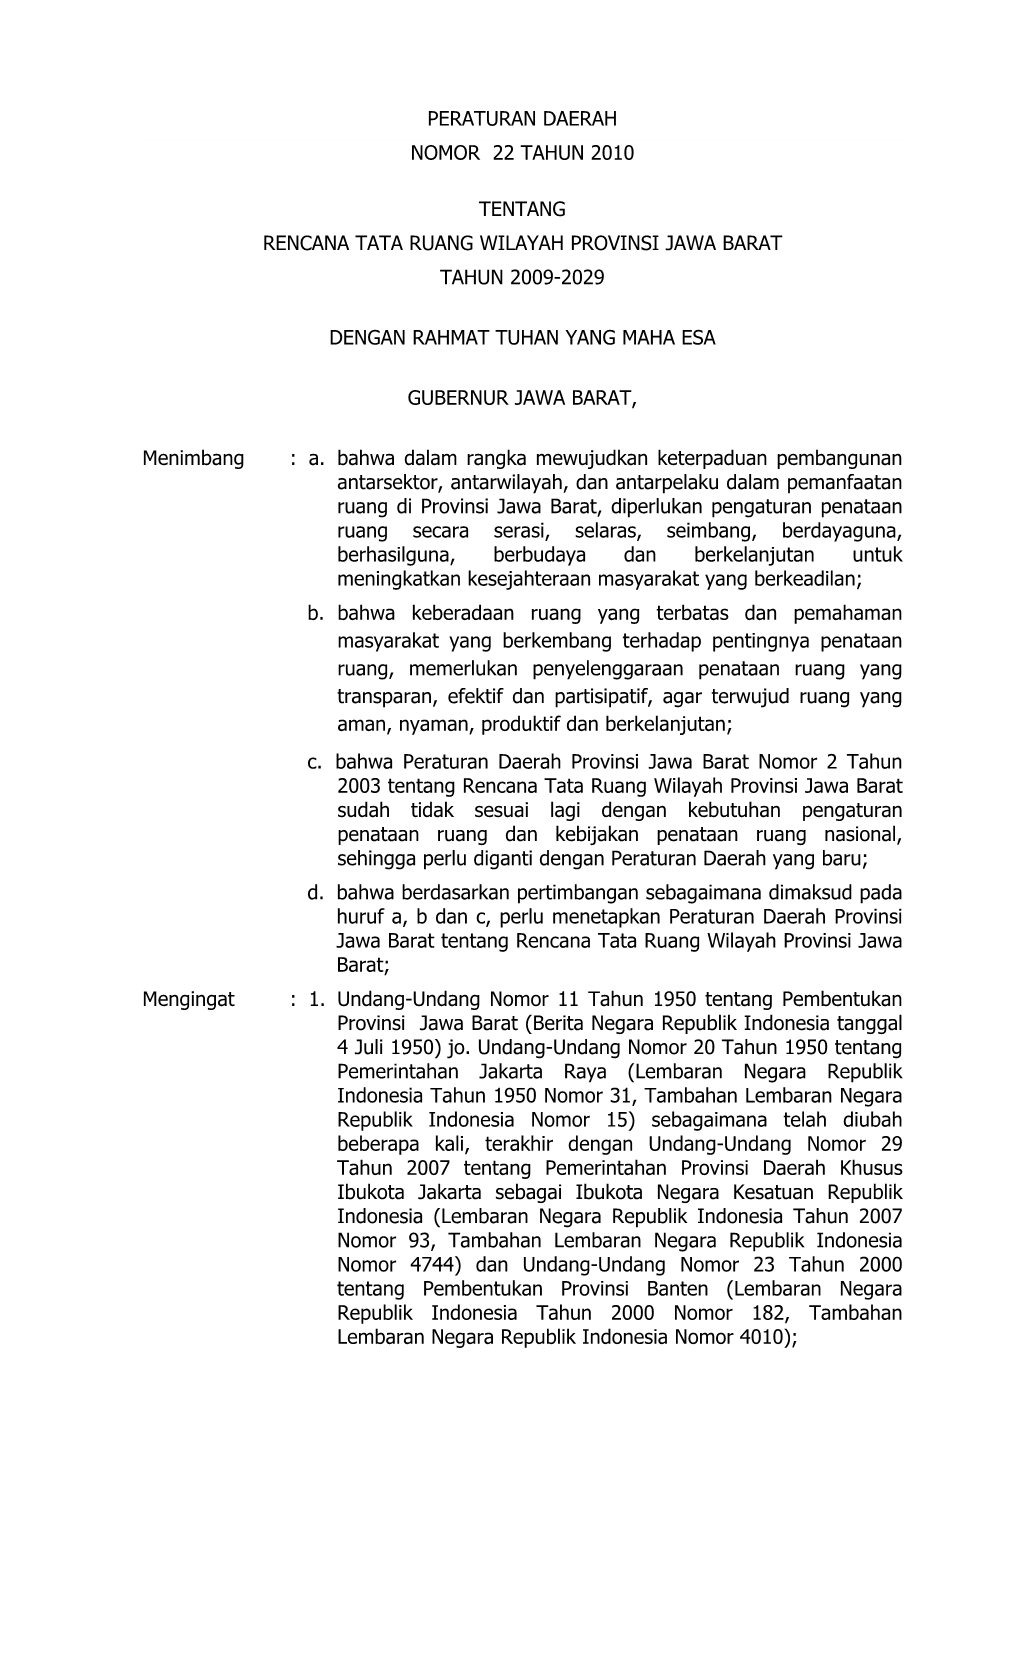 Peraturan Daerah Provinsi Jawa Barat Nomor 22 Tahun 2010